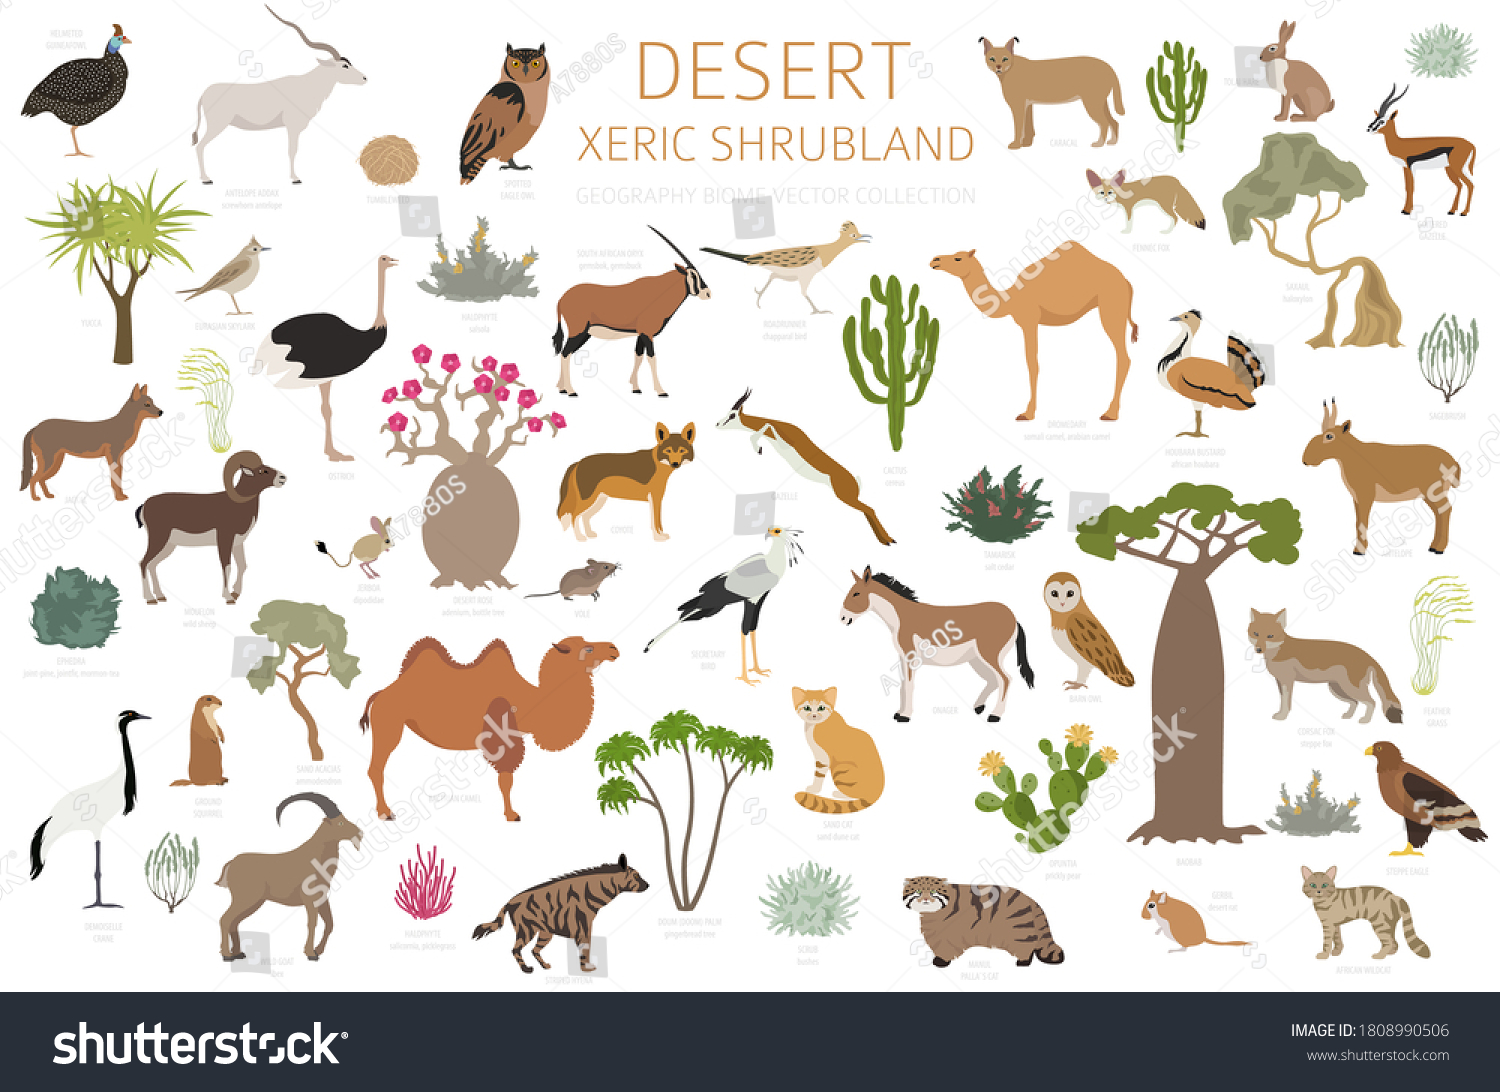 SVG of Desert biome, xeric shrubland natural region infographic. Terrestrial ecosystem world map. Animals, birds and vegetations design set. Vector illustration svg